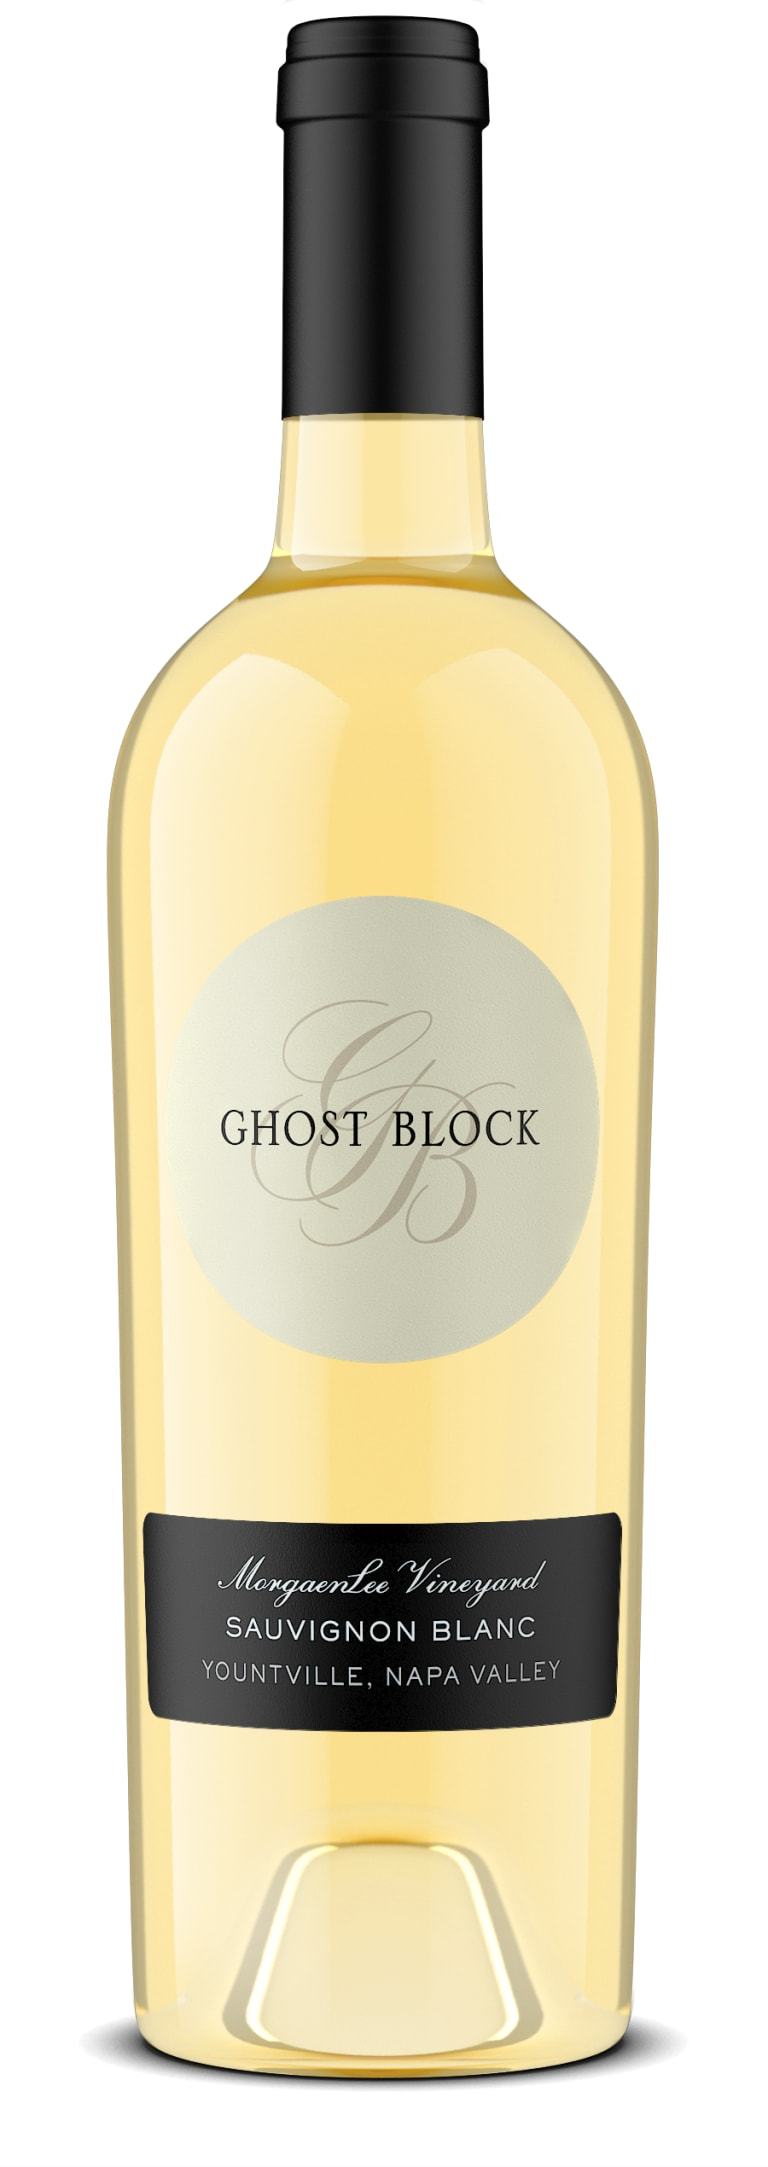 Ghost Block Sauvignon Blanc Morganlee Vineyard 2018